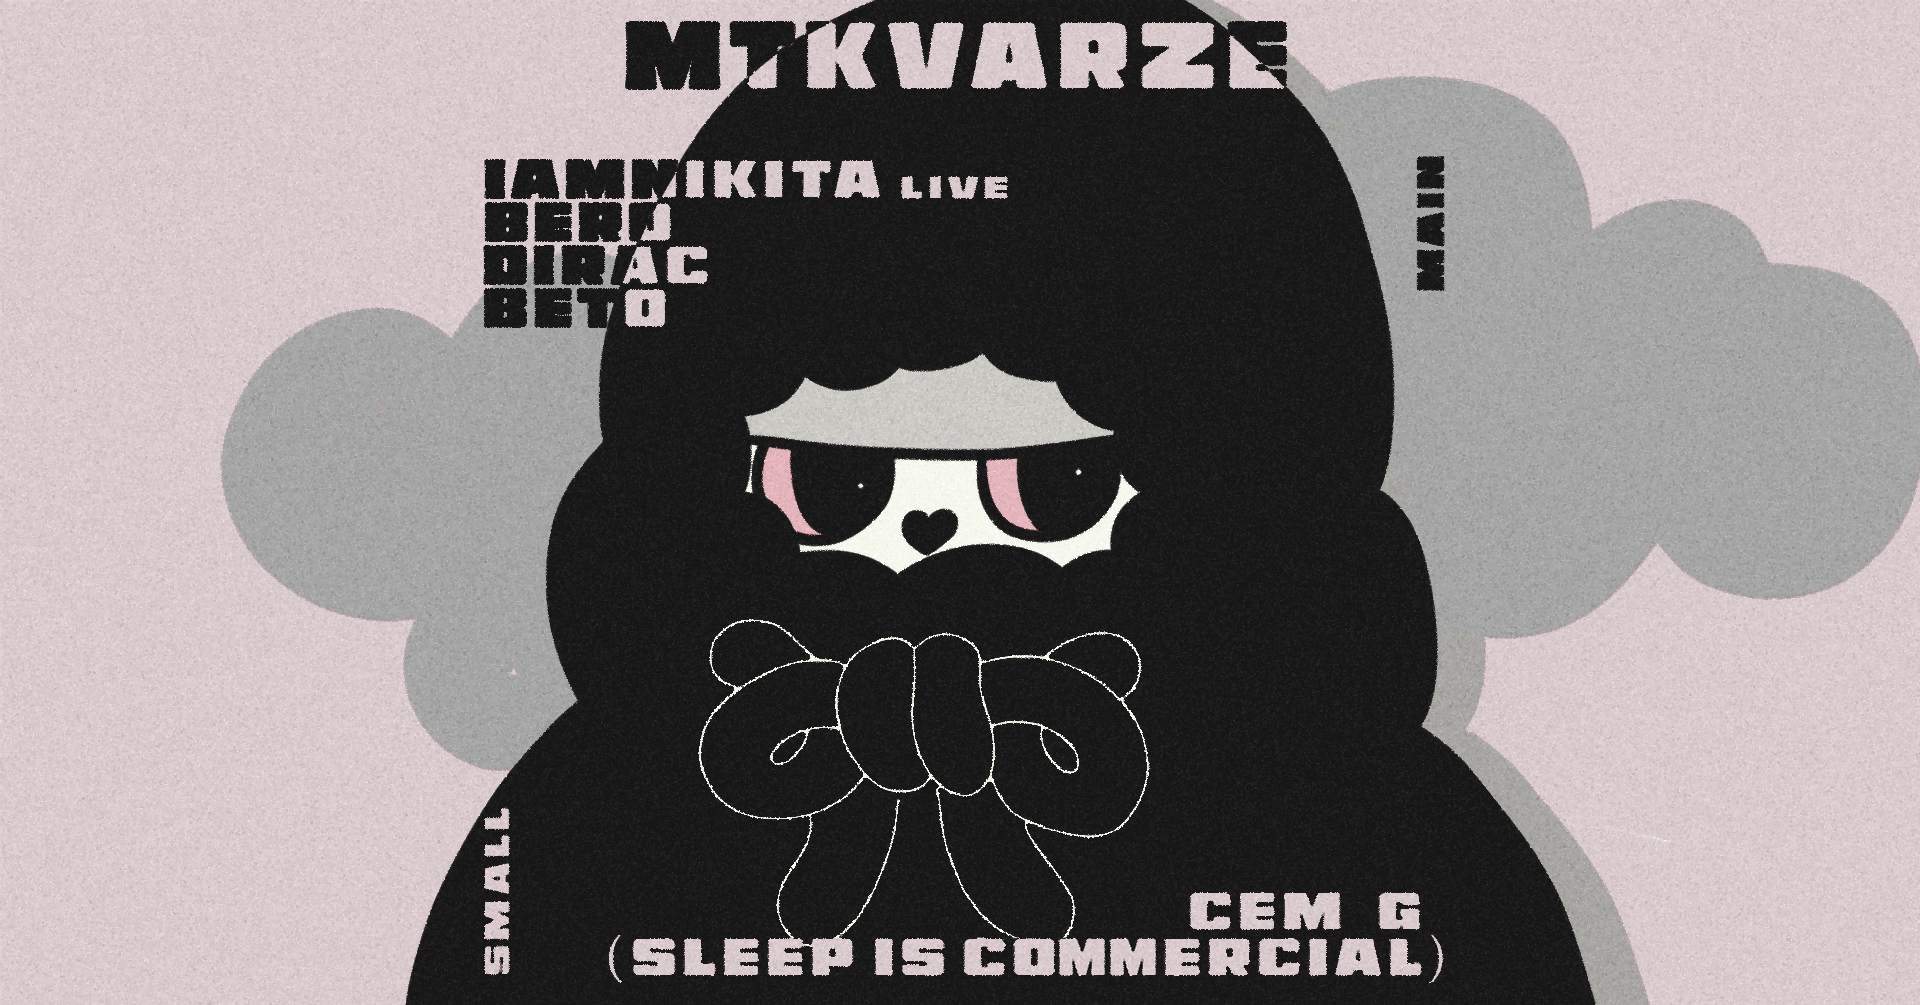 IAMNIKITA [Live] • Bero • Dirac • Beto • Cem G (Sleep is Commercial) - フライヤー表